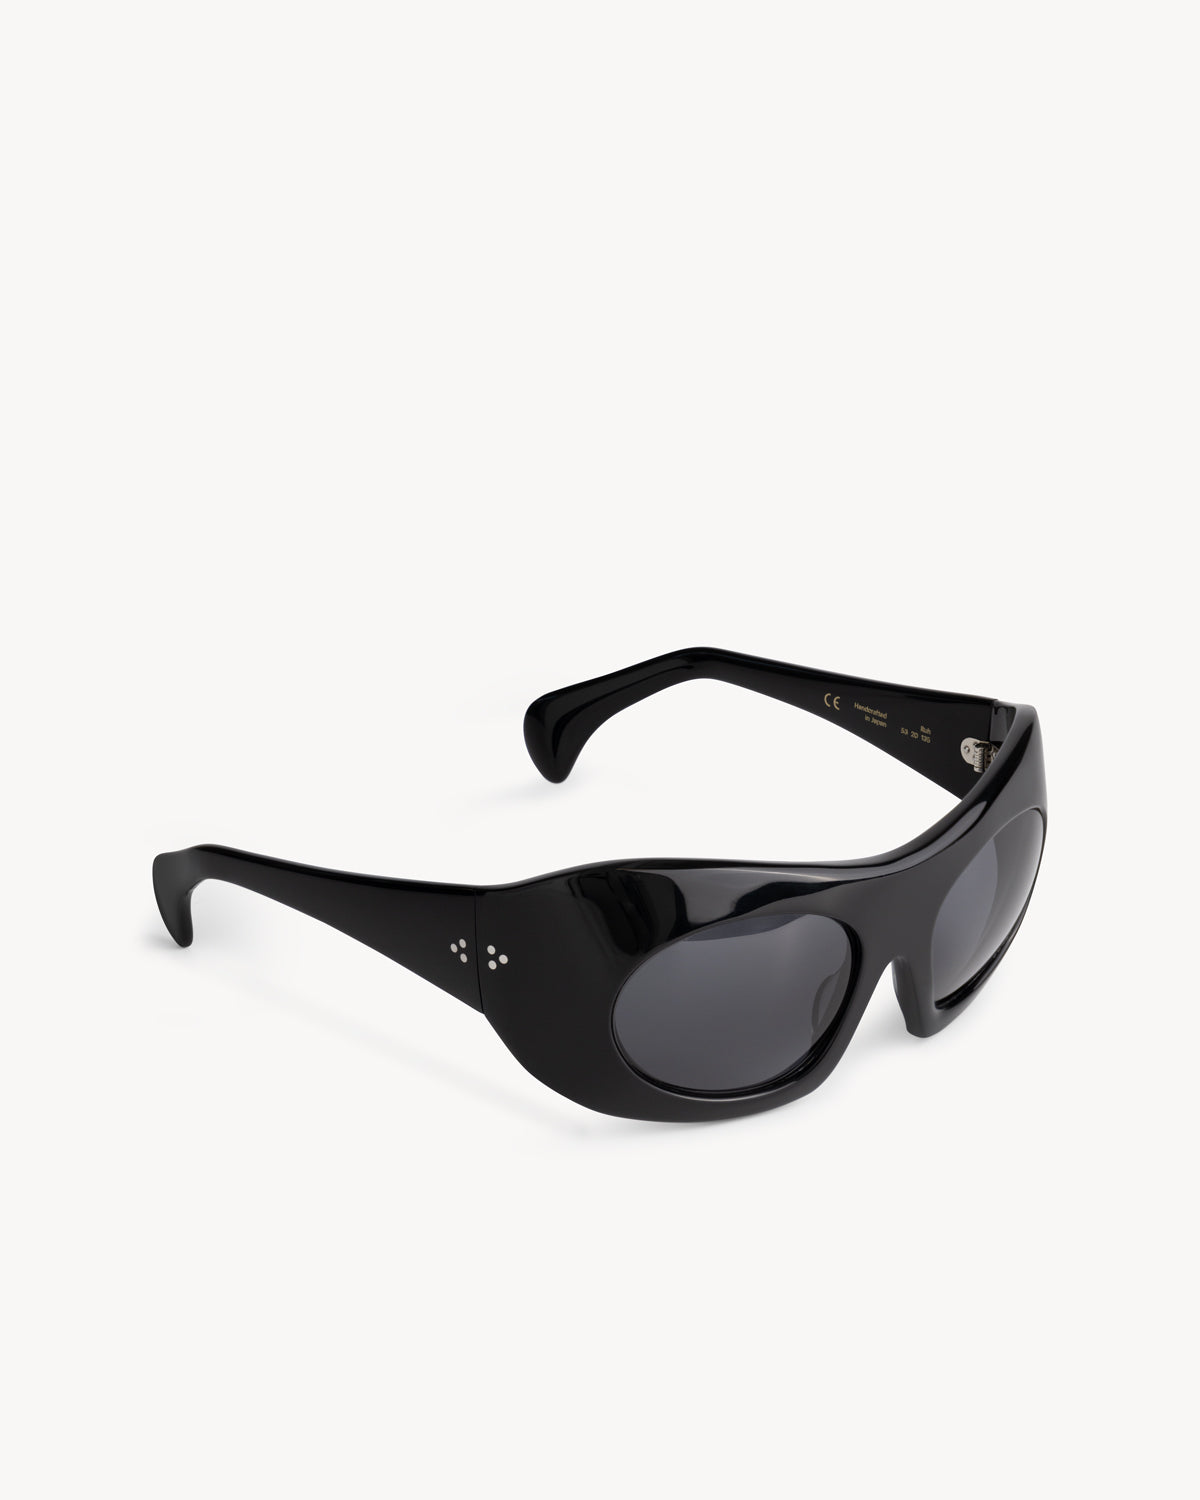 Port Tanger Ruh Sunglasses in Black acetate and Black Lenses 2